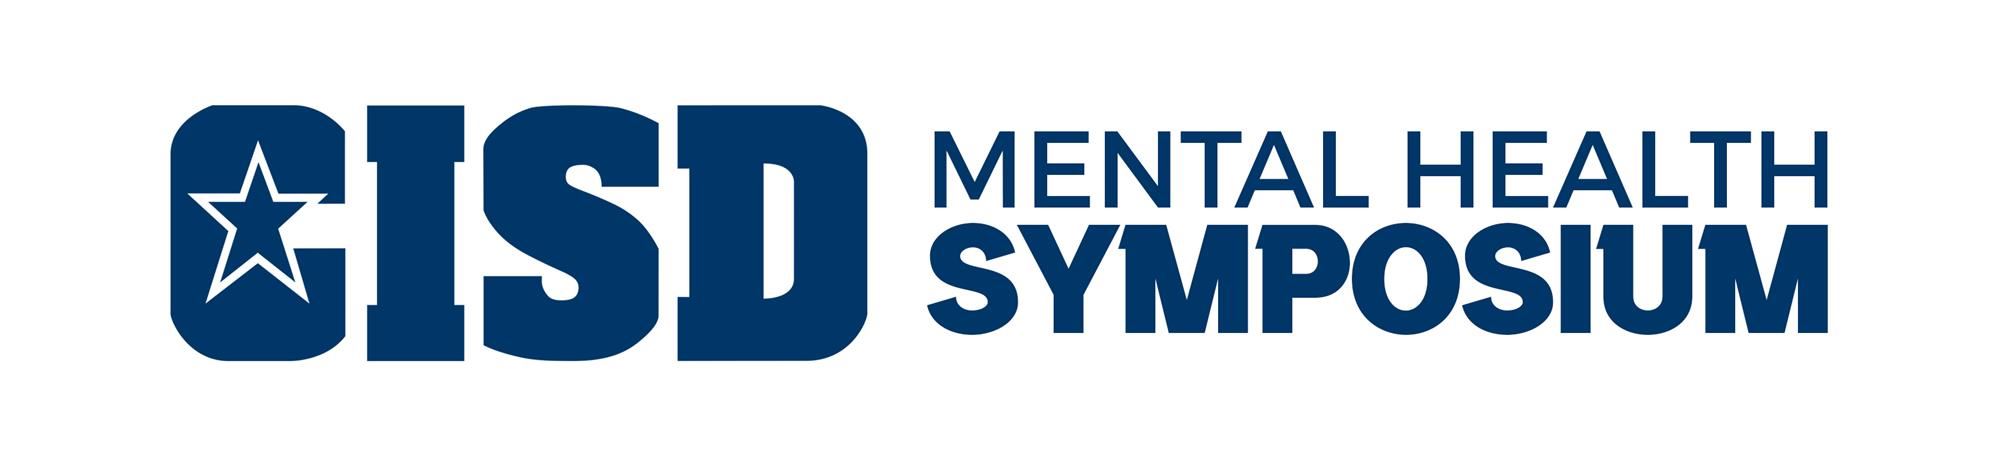 CISD Mental Health Symposium Banner